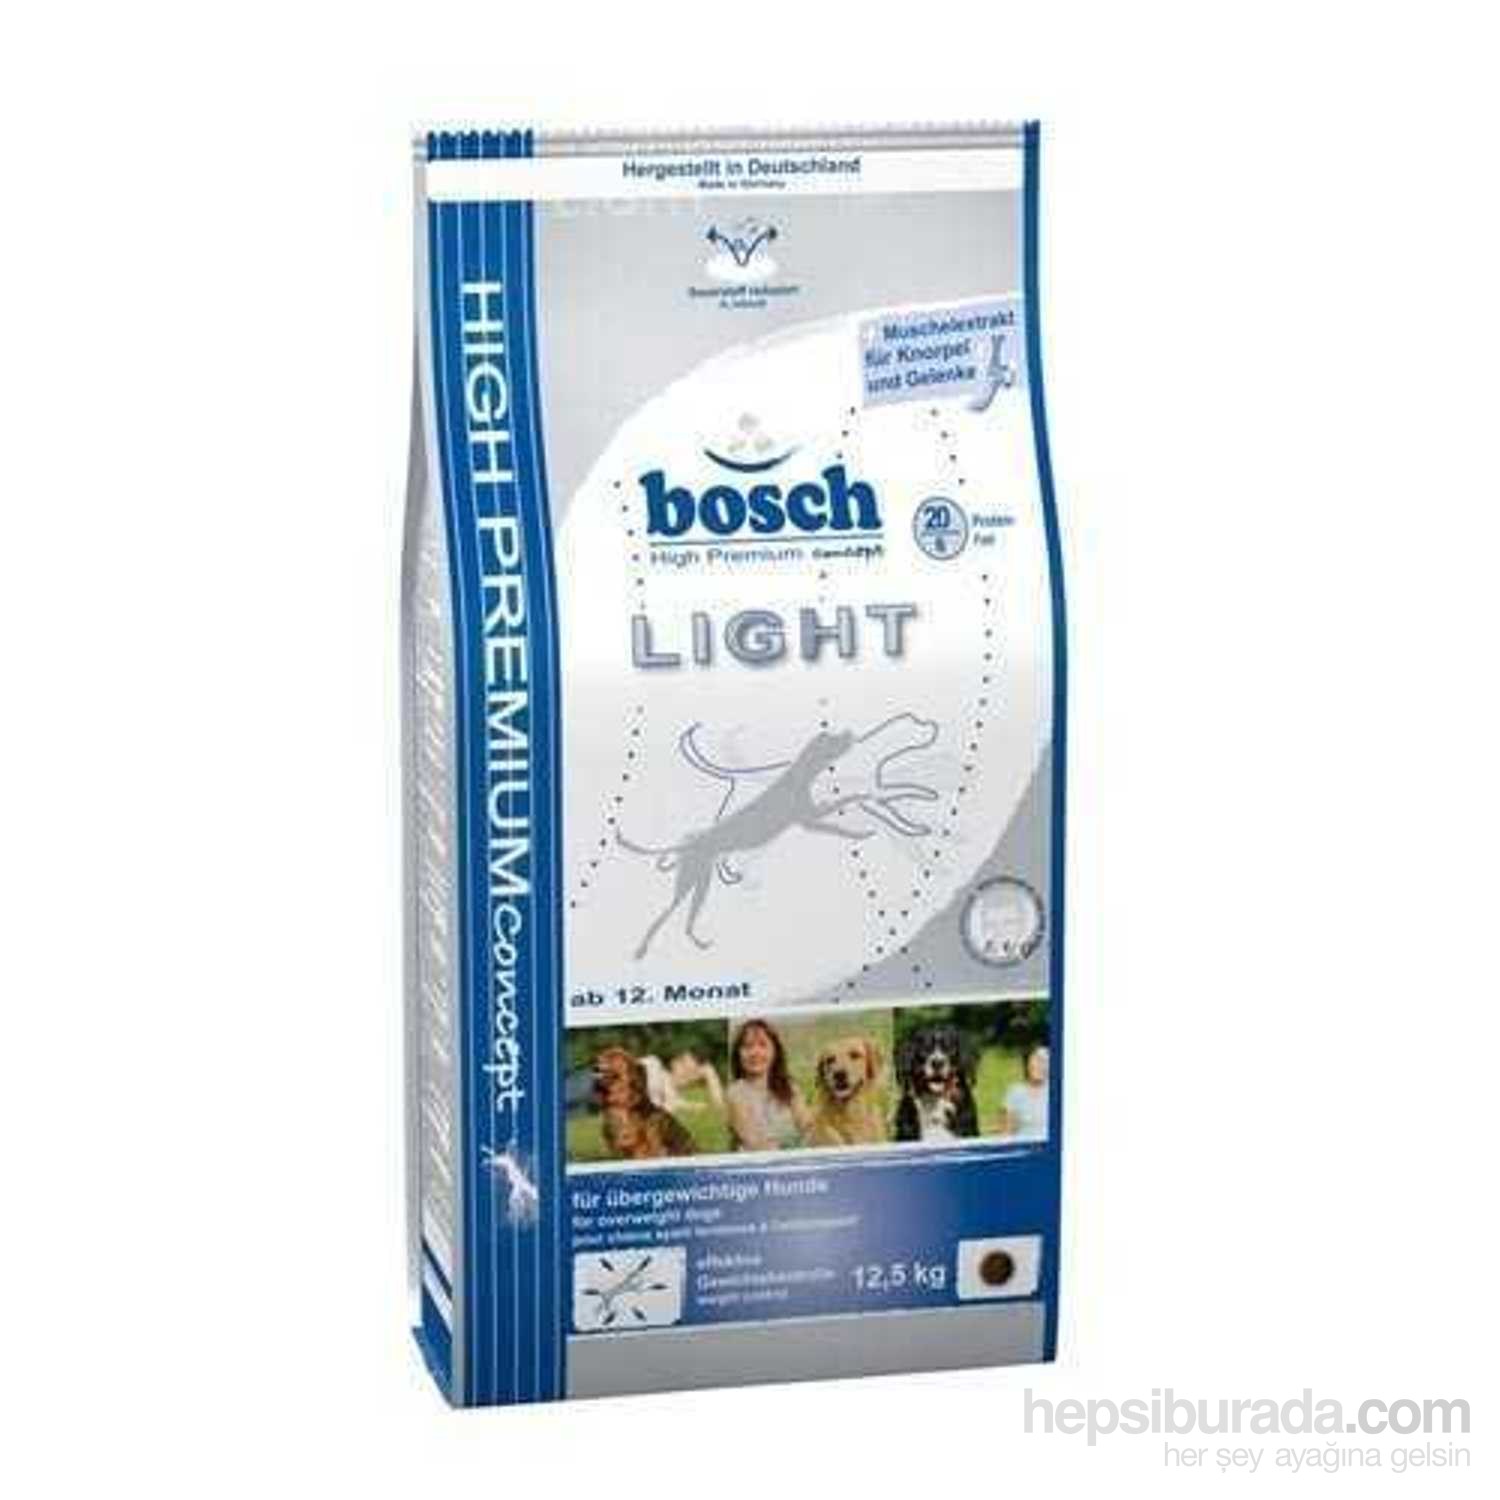 Bosch Light Diyet Formüllü Köpek Maması 12.5 Kg